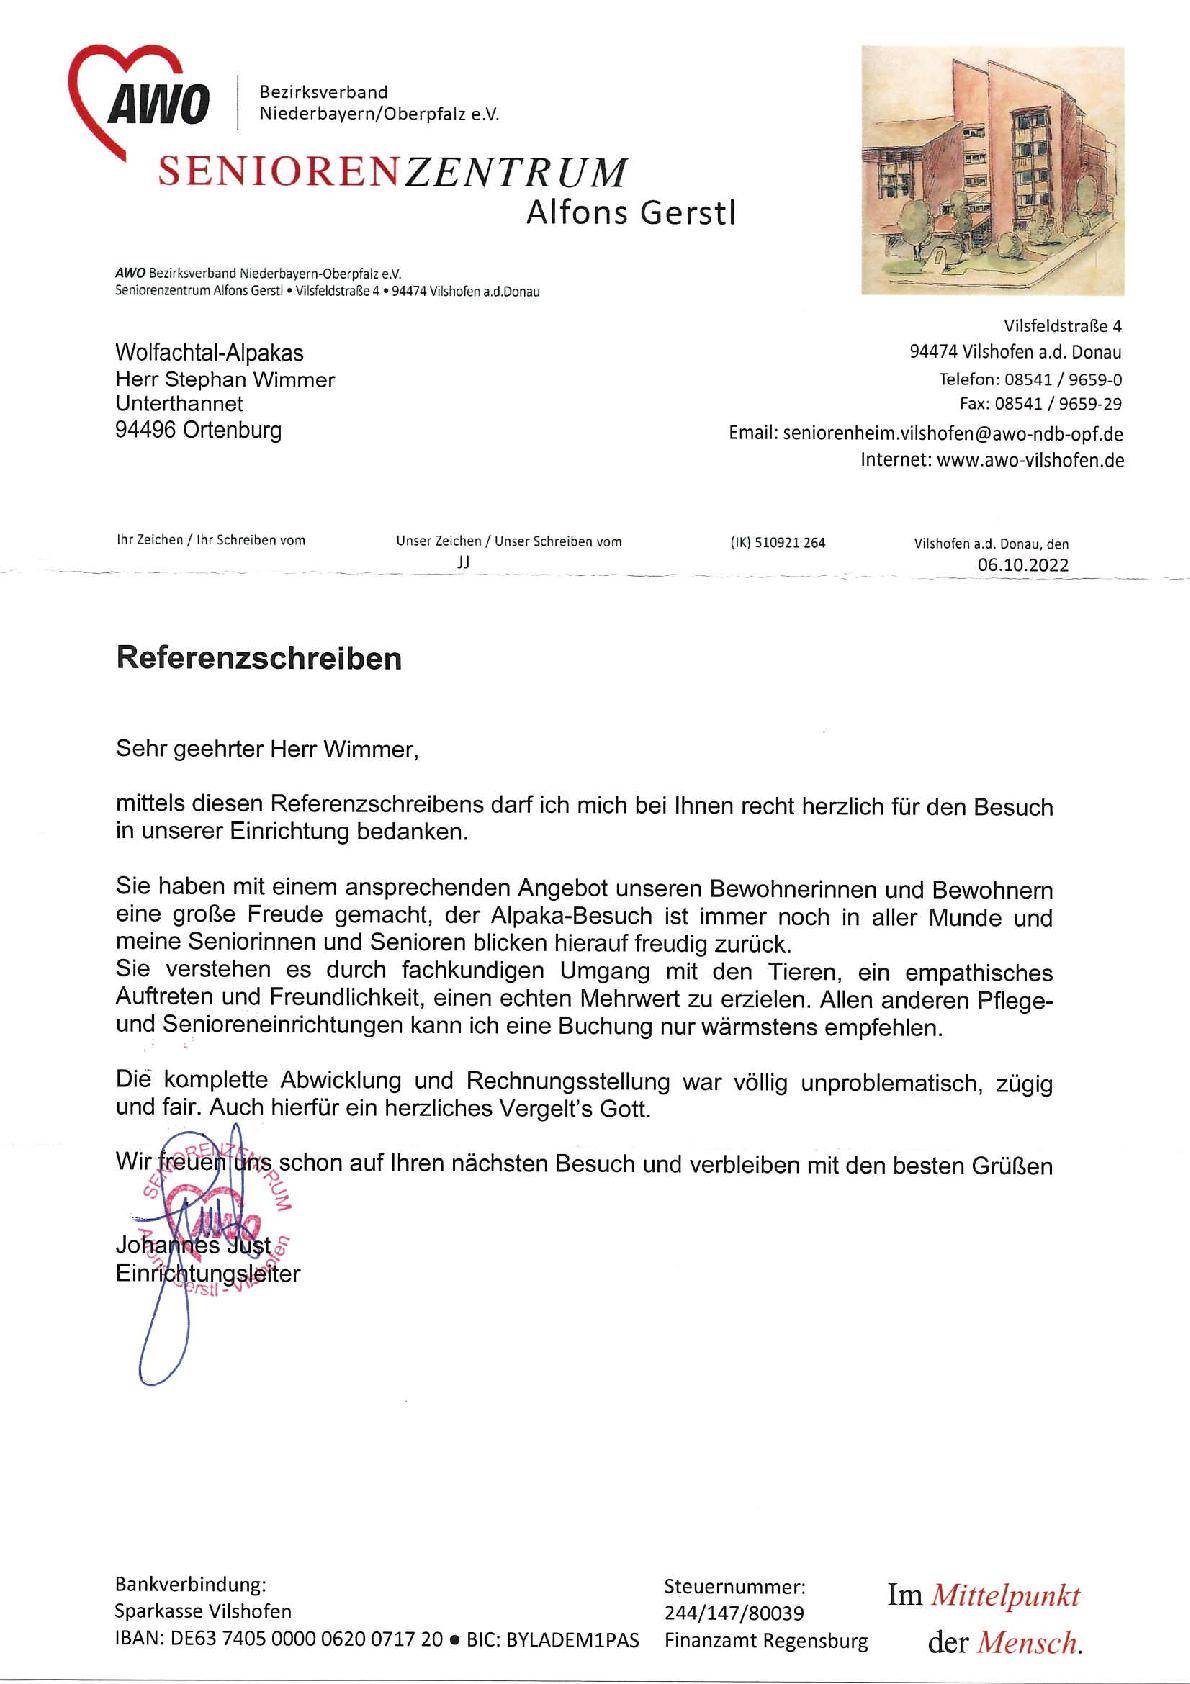 2022-10-06 - Referenzschreiben - AWO Vilshofen - Alfons Gerstl-001